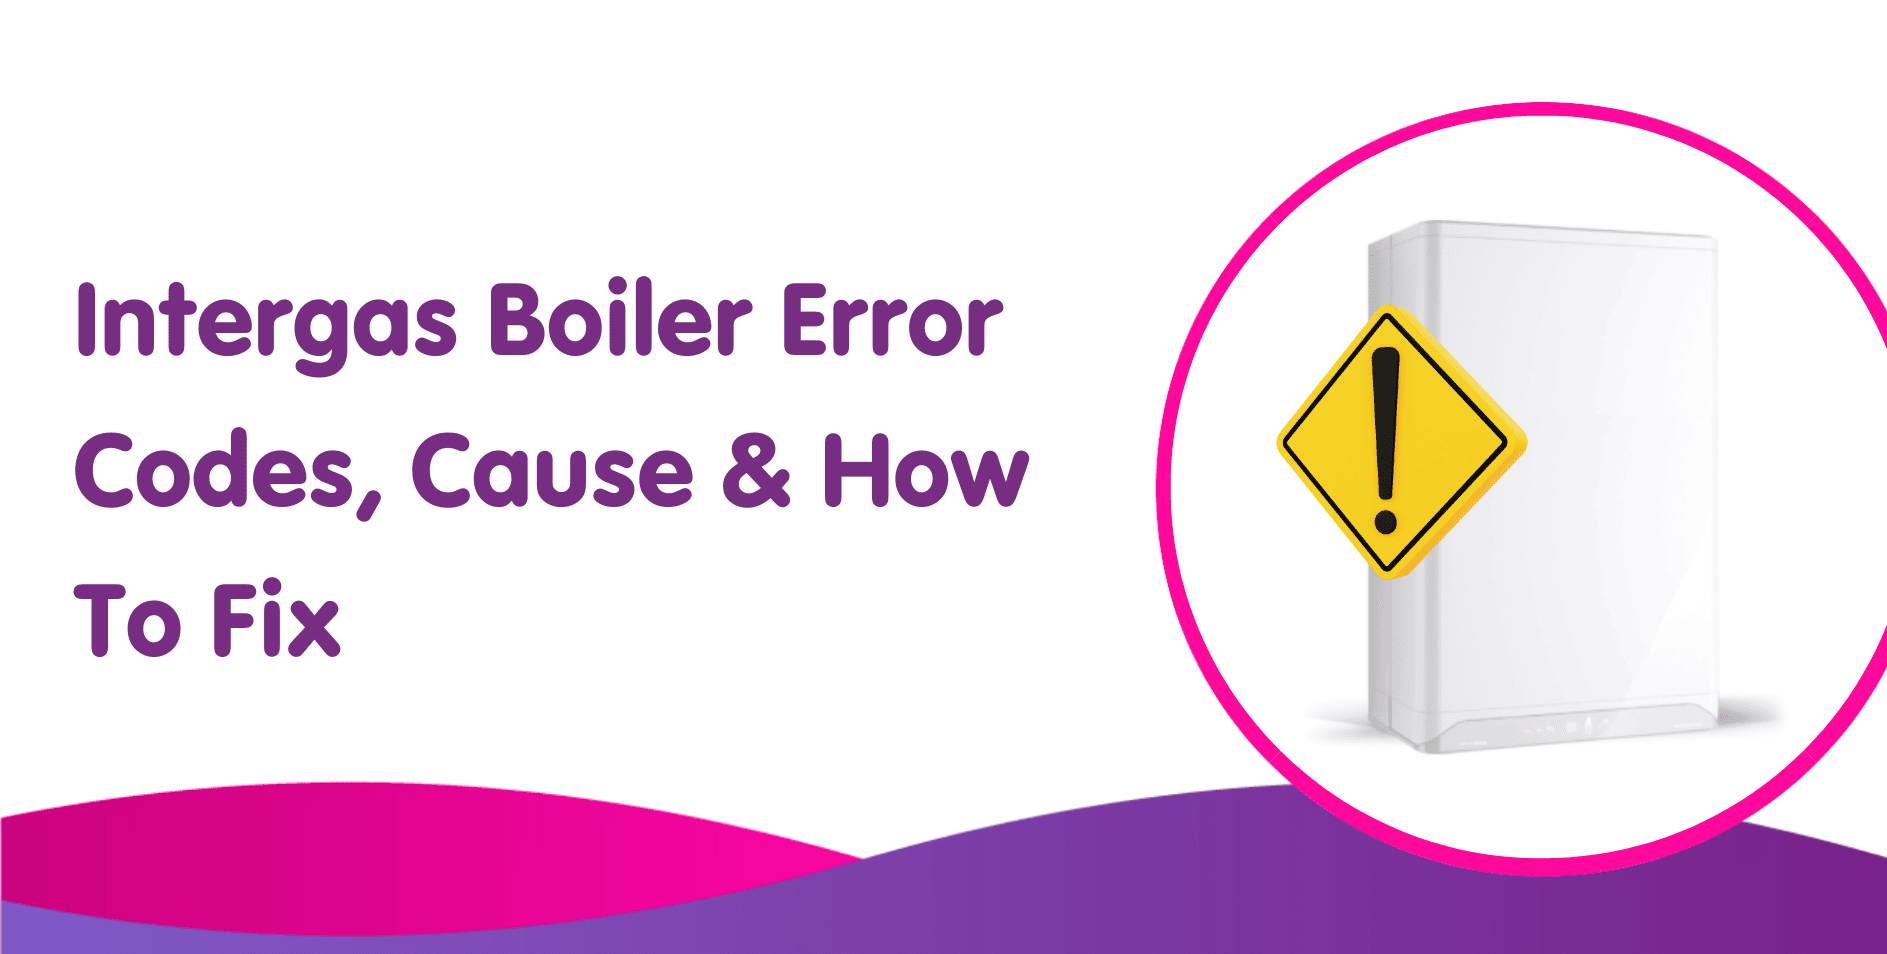 Intergas Boiler Error Codes, Cause & How To Fix